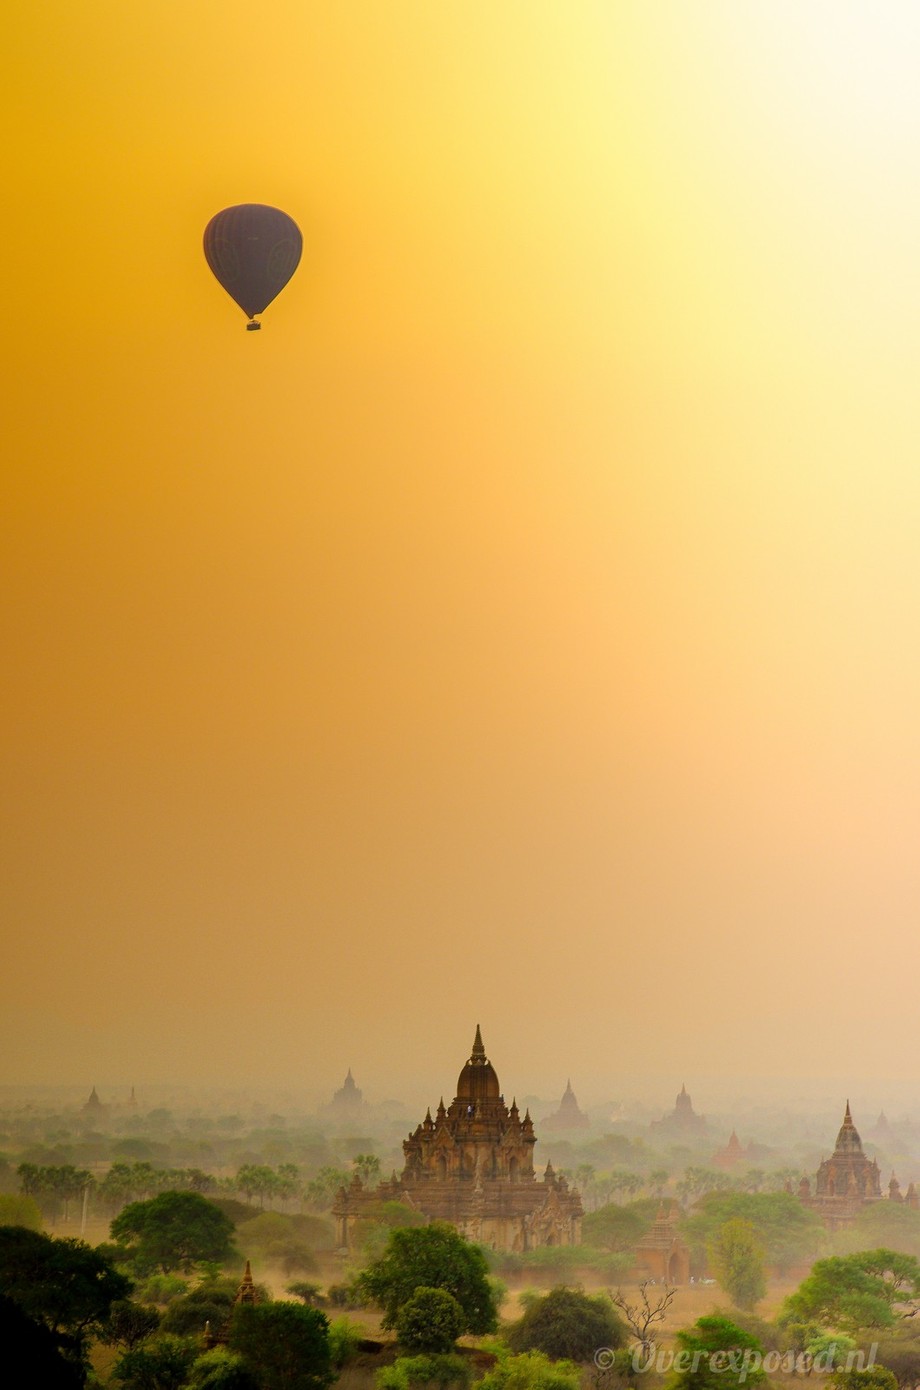 Bagan-Balloon by russellpearson